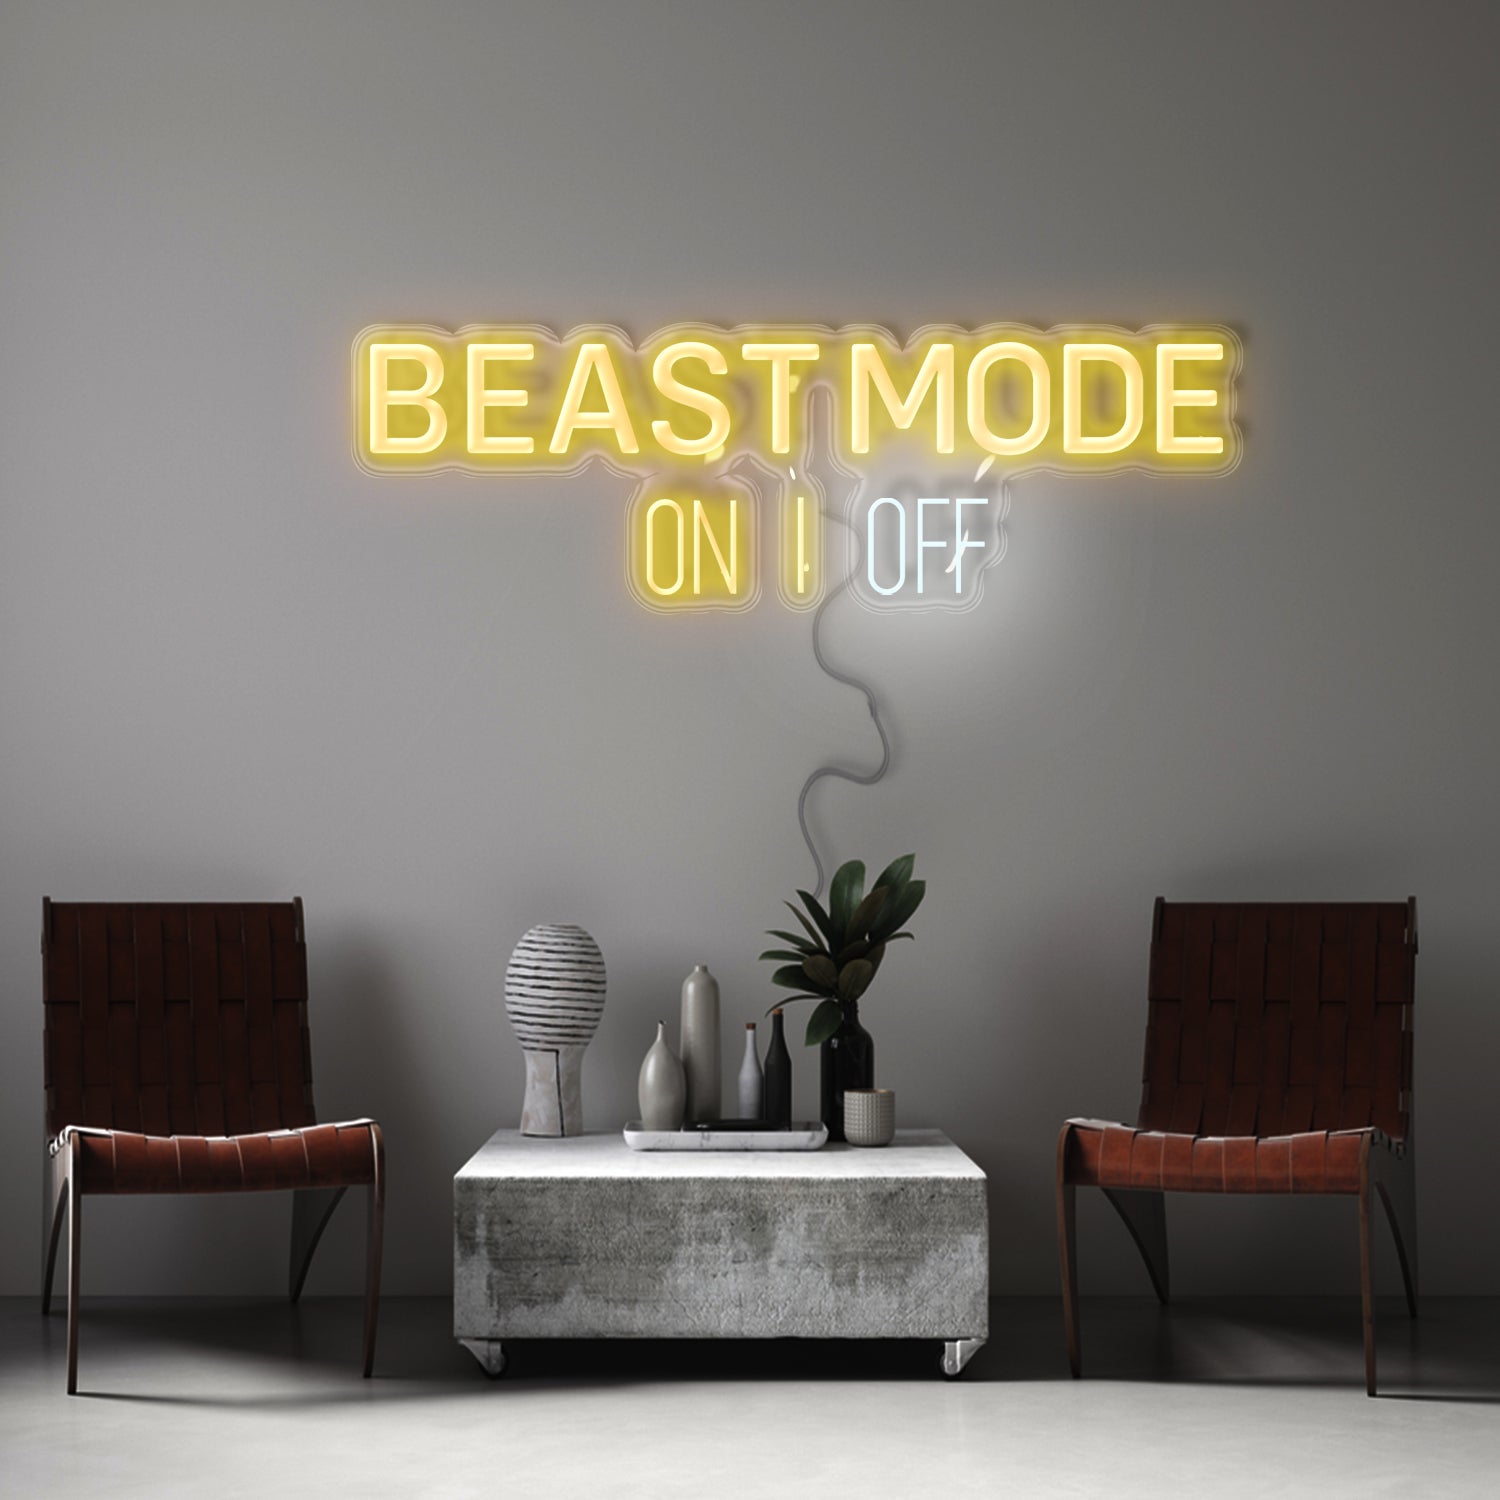 Beast mode - on off